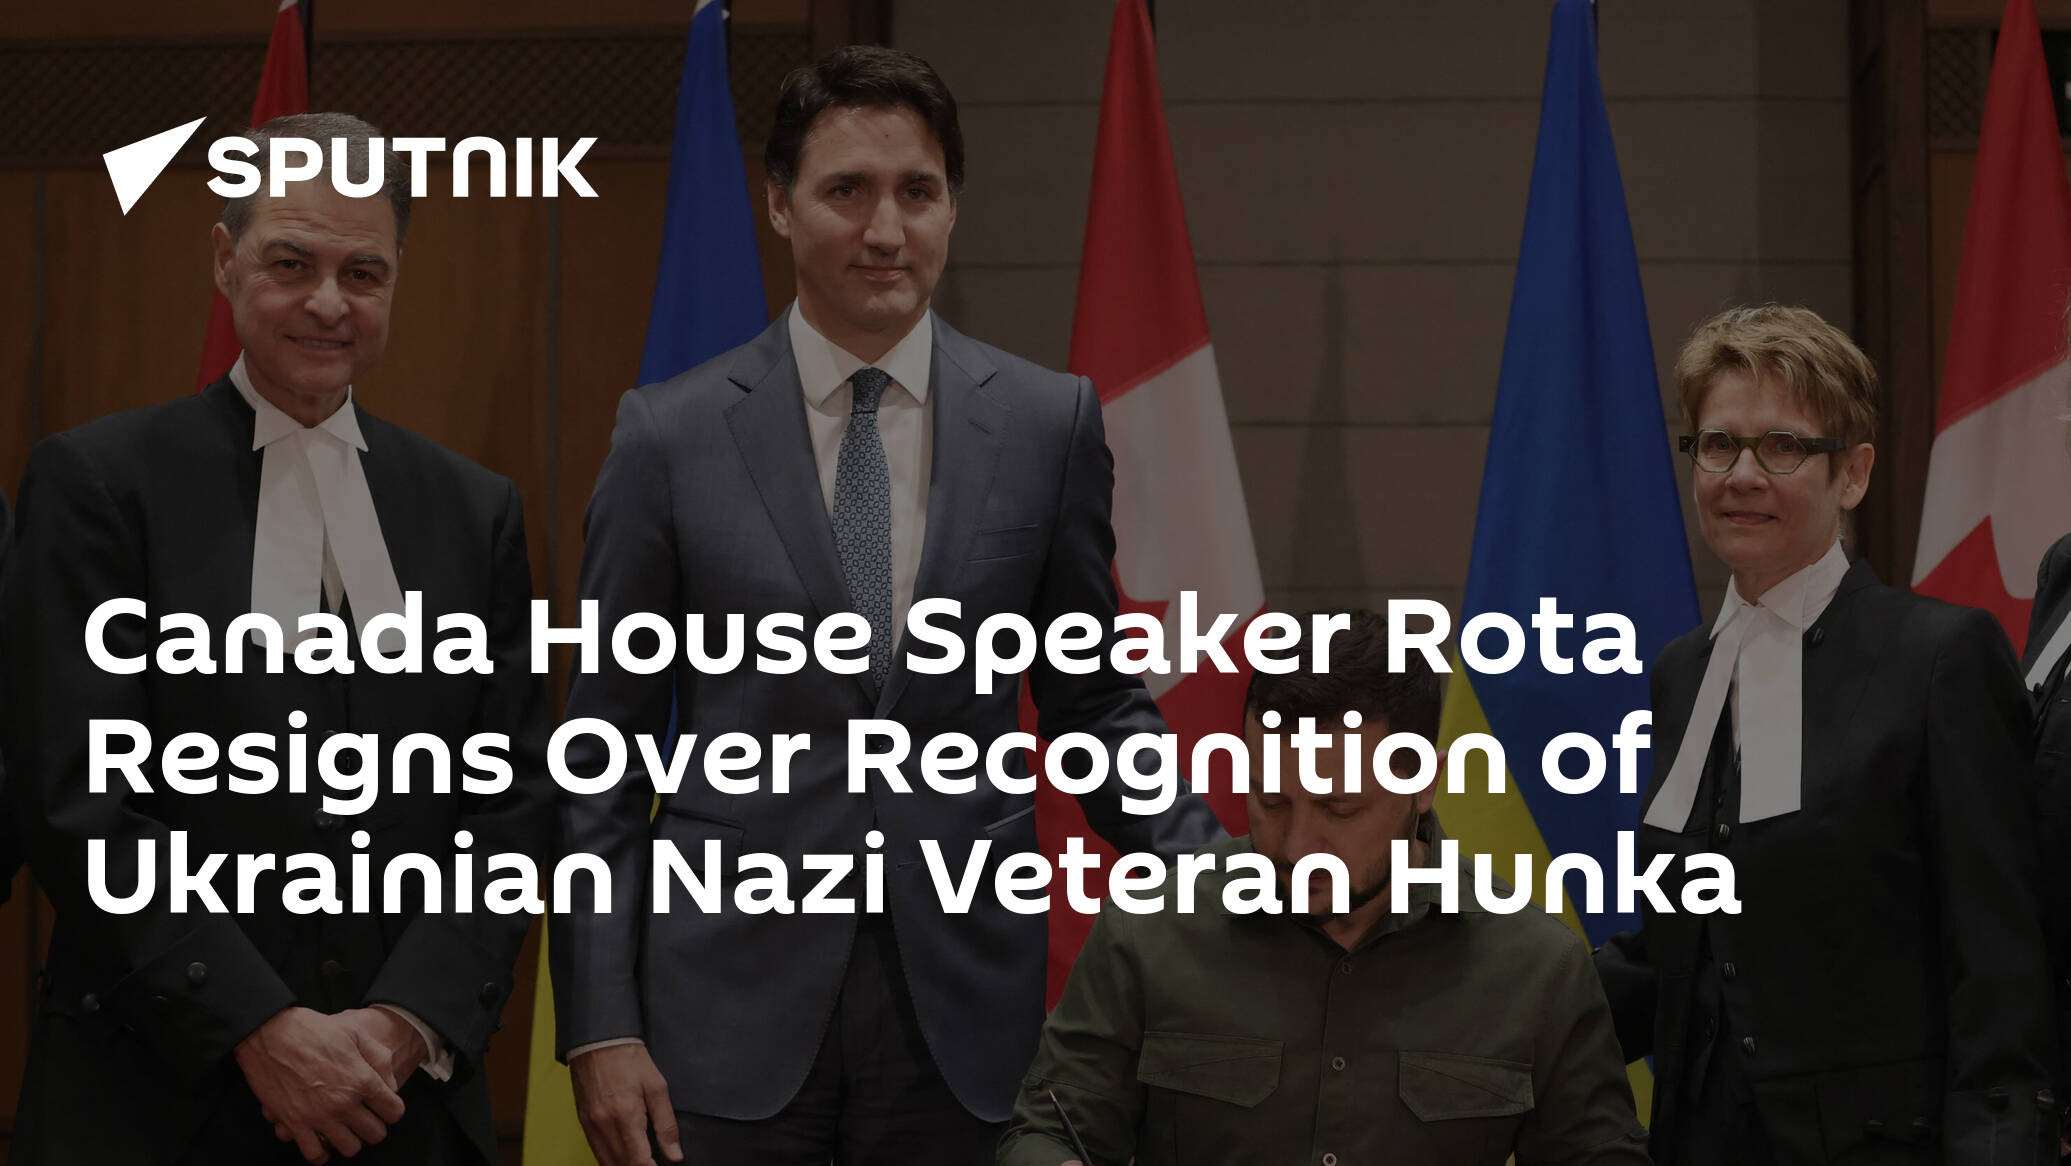 Canada House Speaker Rota Resigns Over Recognition of Ukrainian Nazi Veteran Hunka